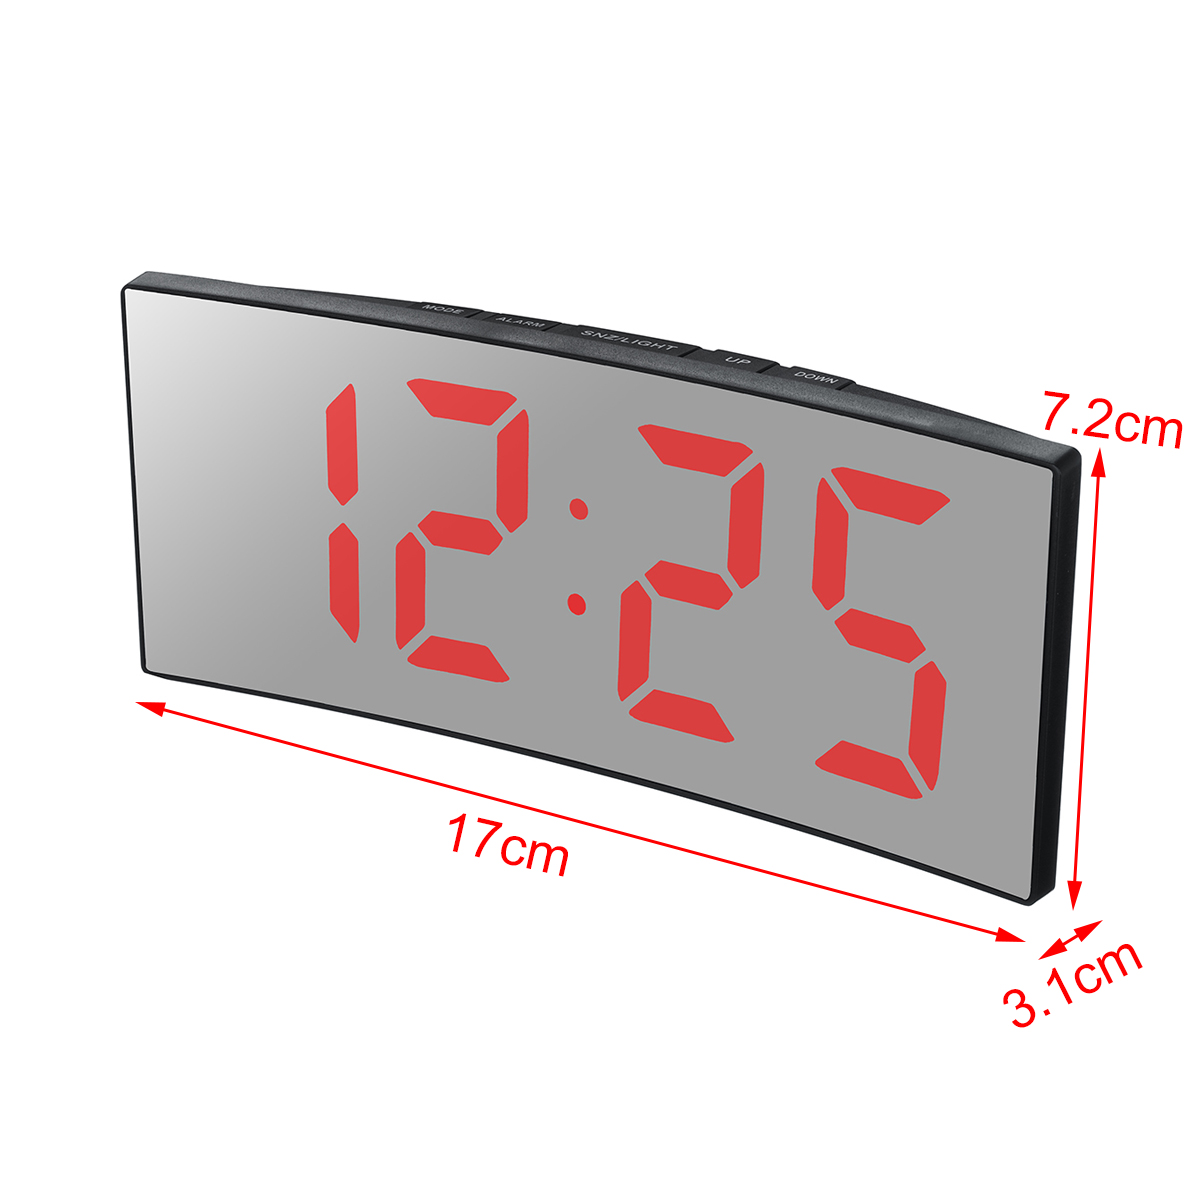 Curved-LED-Digital-Alarm-Clock-Mirror-Table-Display-Temperature-Snooze-USB-Room-1639017-3